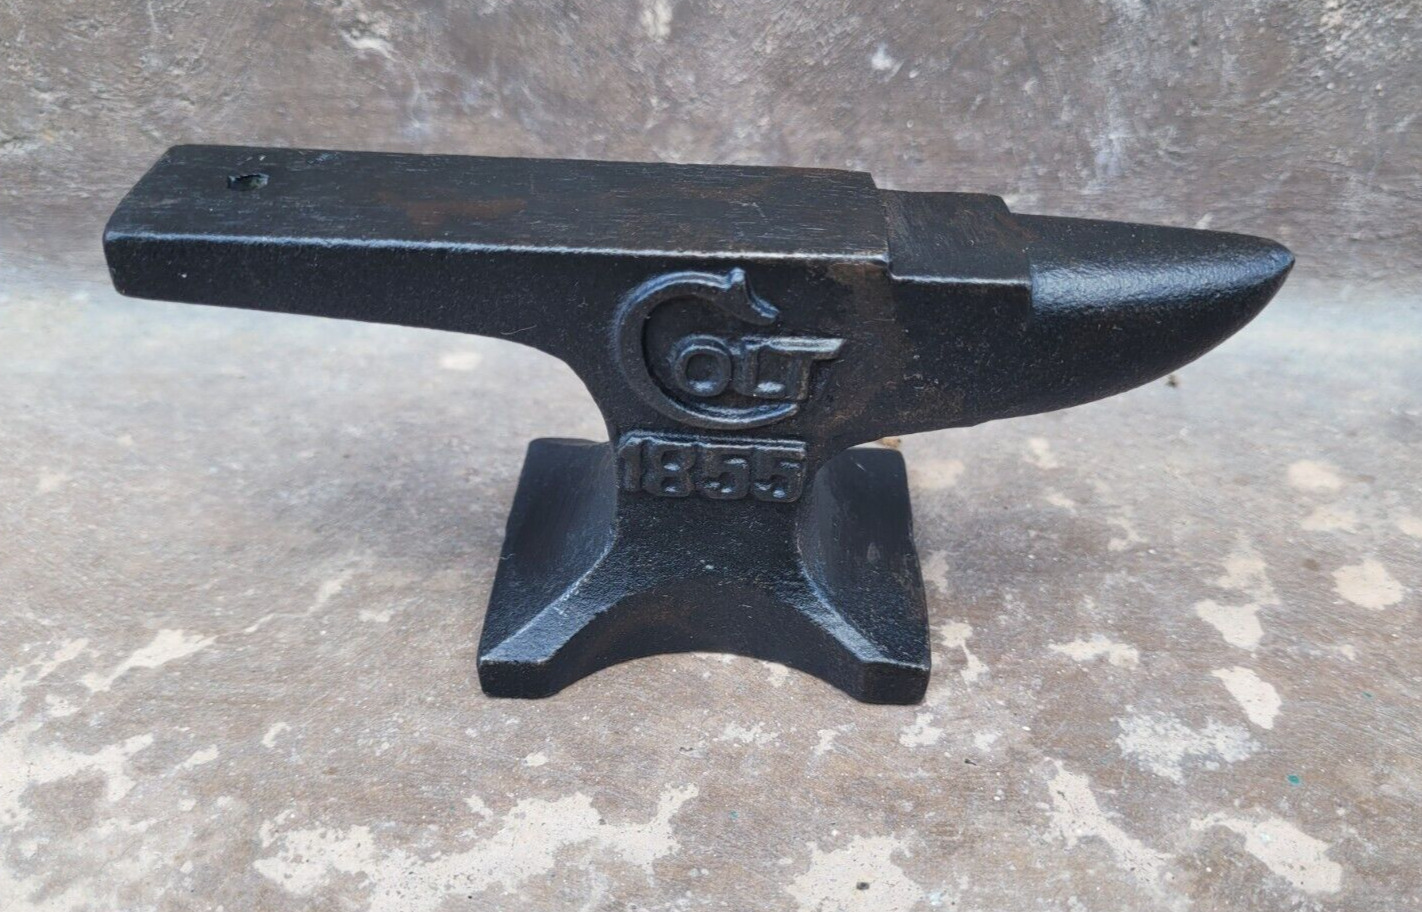 Colt Rifles Anvil Cast Iron Gunsmith Gun Collector Paperweight 1855 Blacksmith